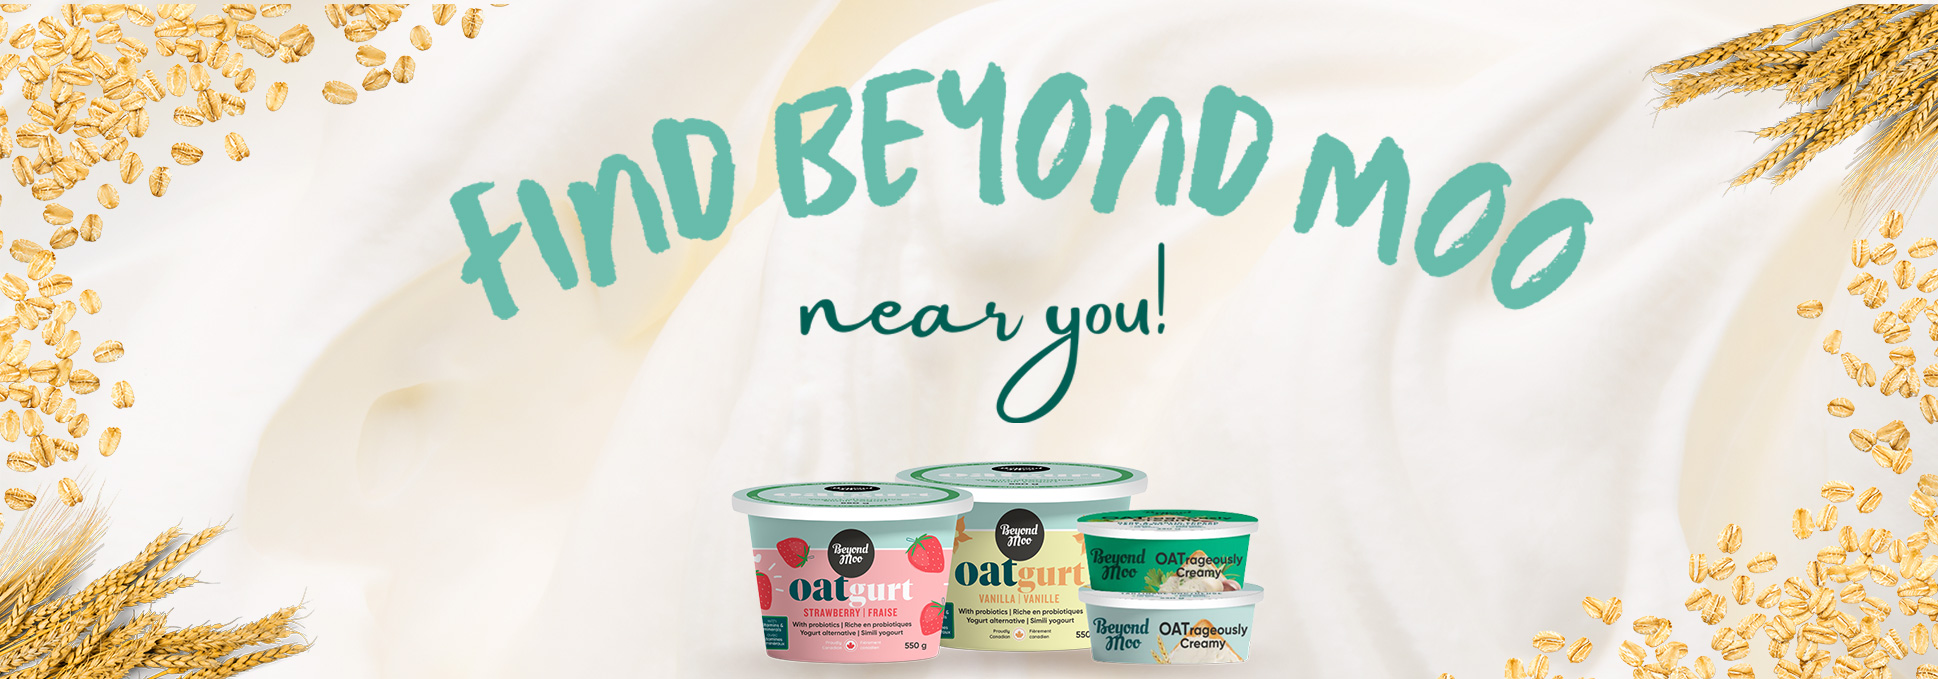 Non-Dairy Alternatives, Oat-based yogurt, kefir, and spreads.